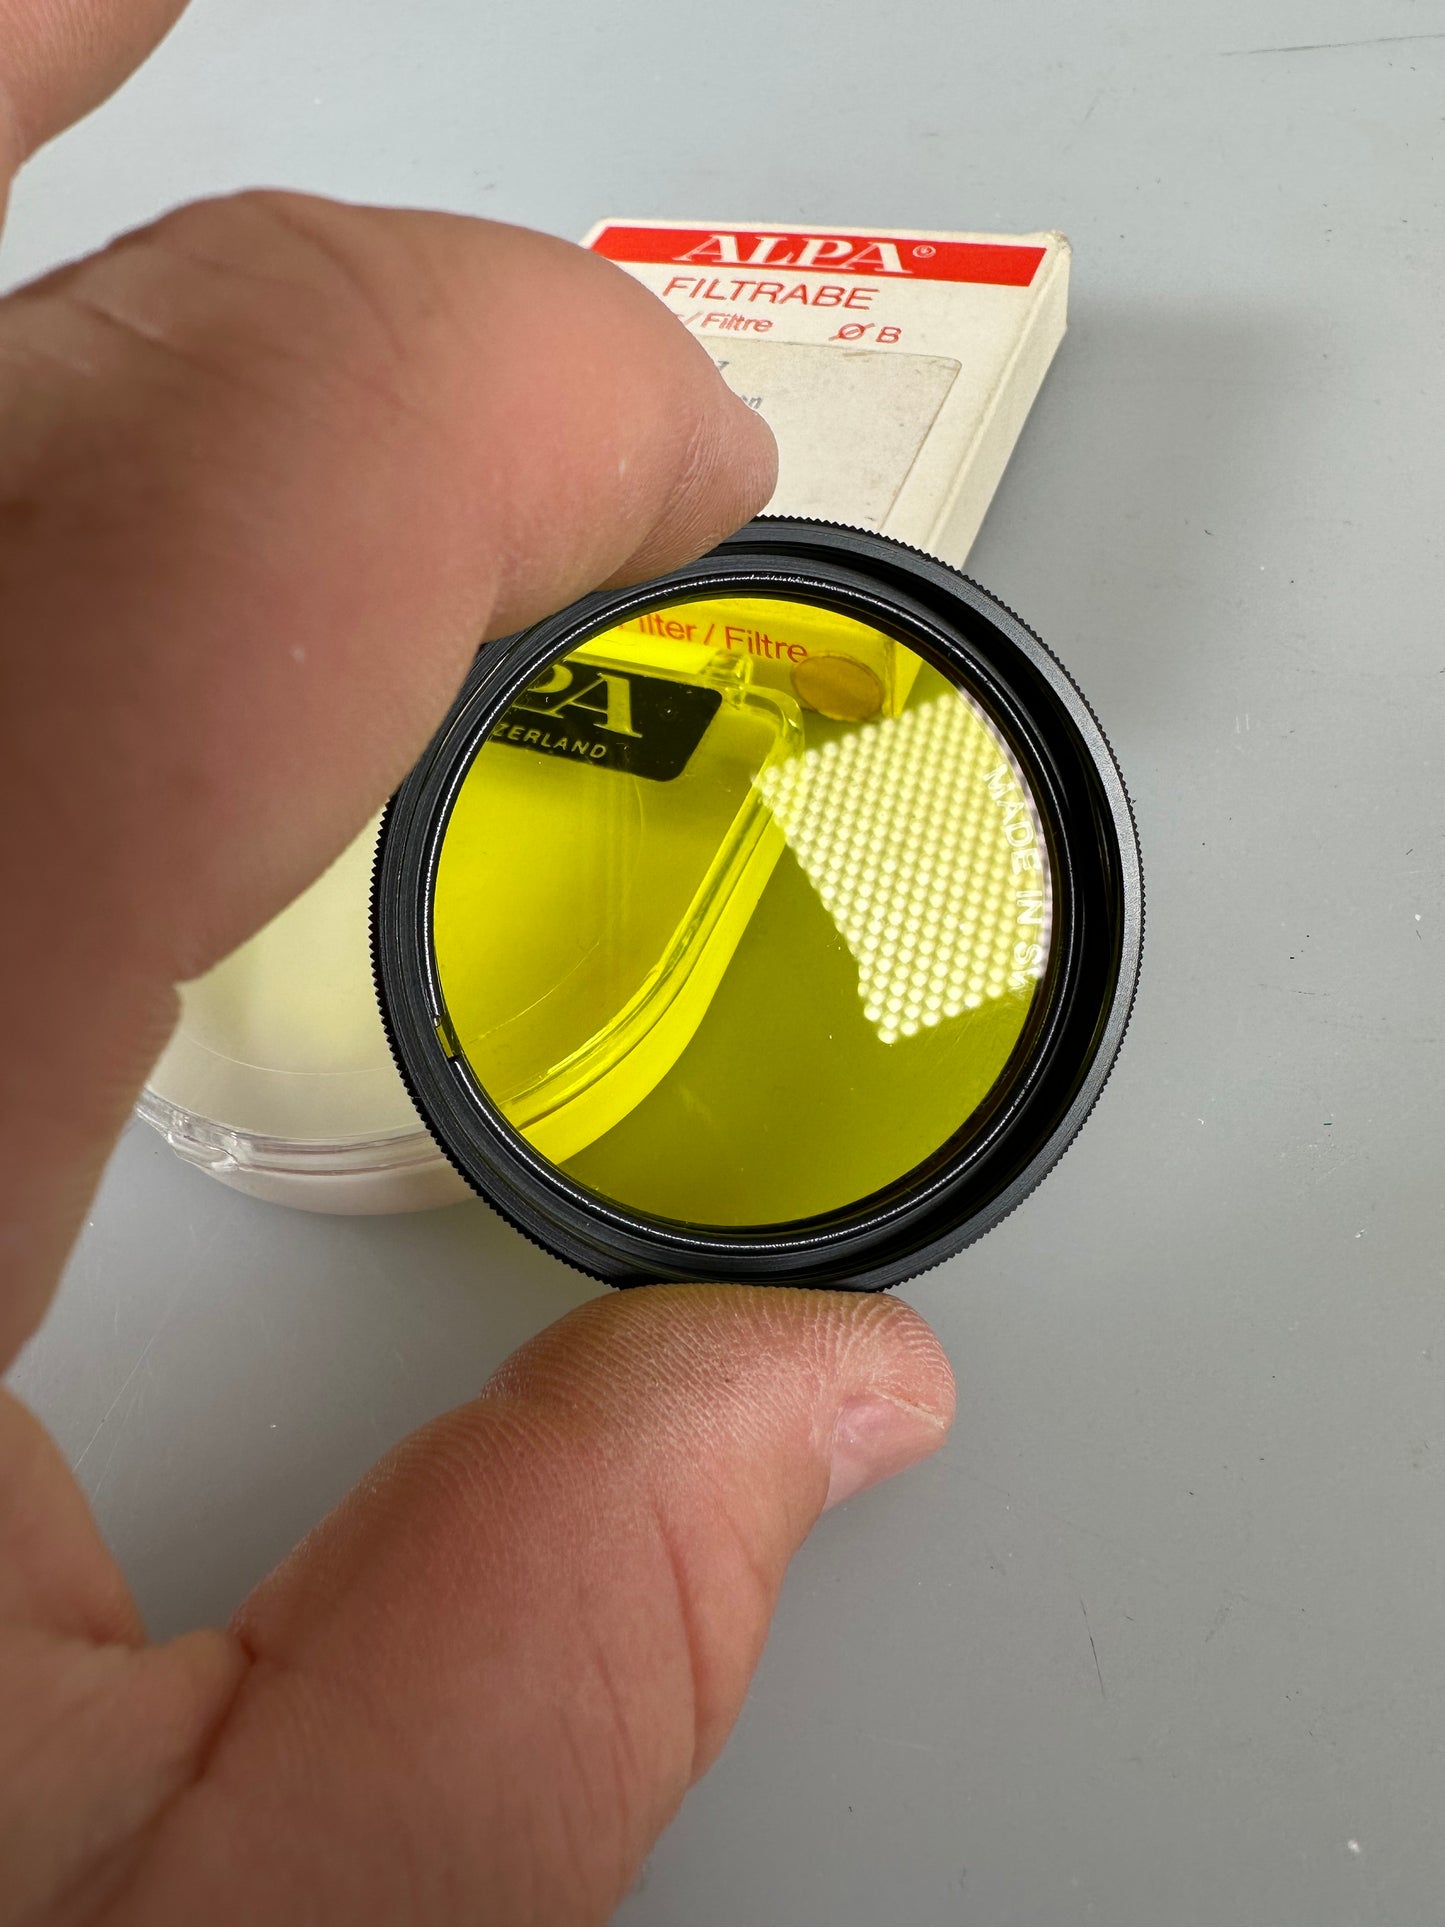 ALPA FILTER 47MM FILTRABE Yellow 47mm medium yellow 1.6X FOR camera LENS